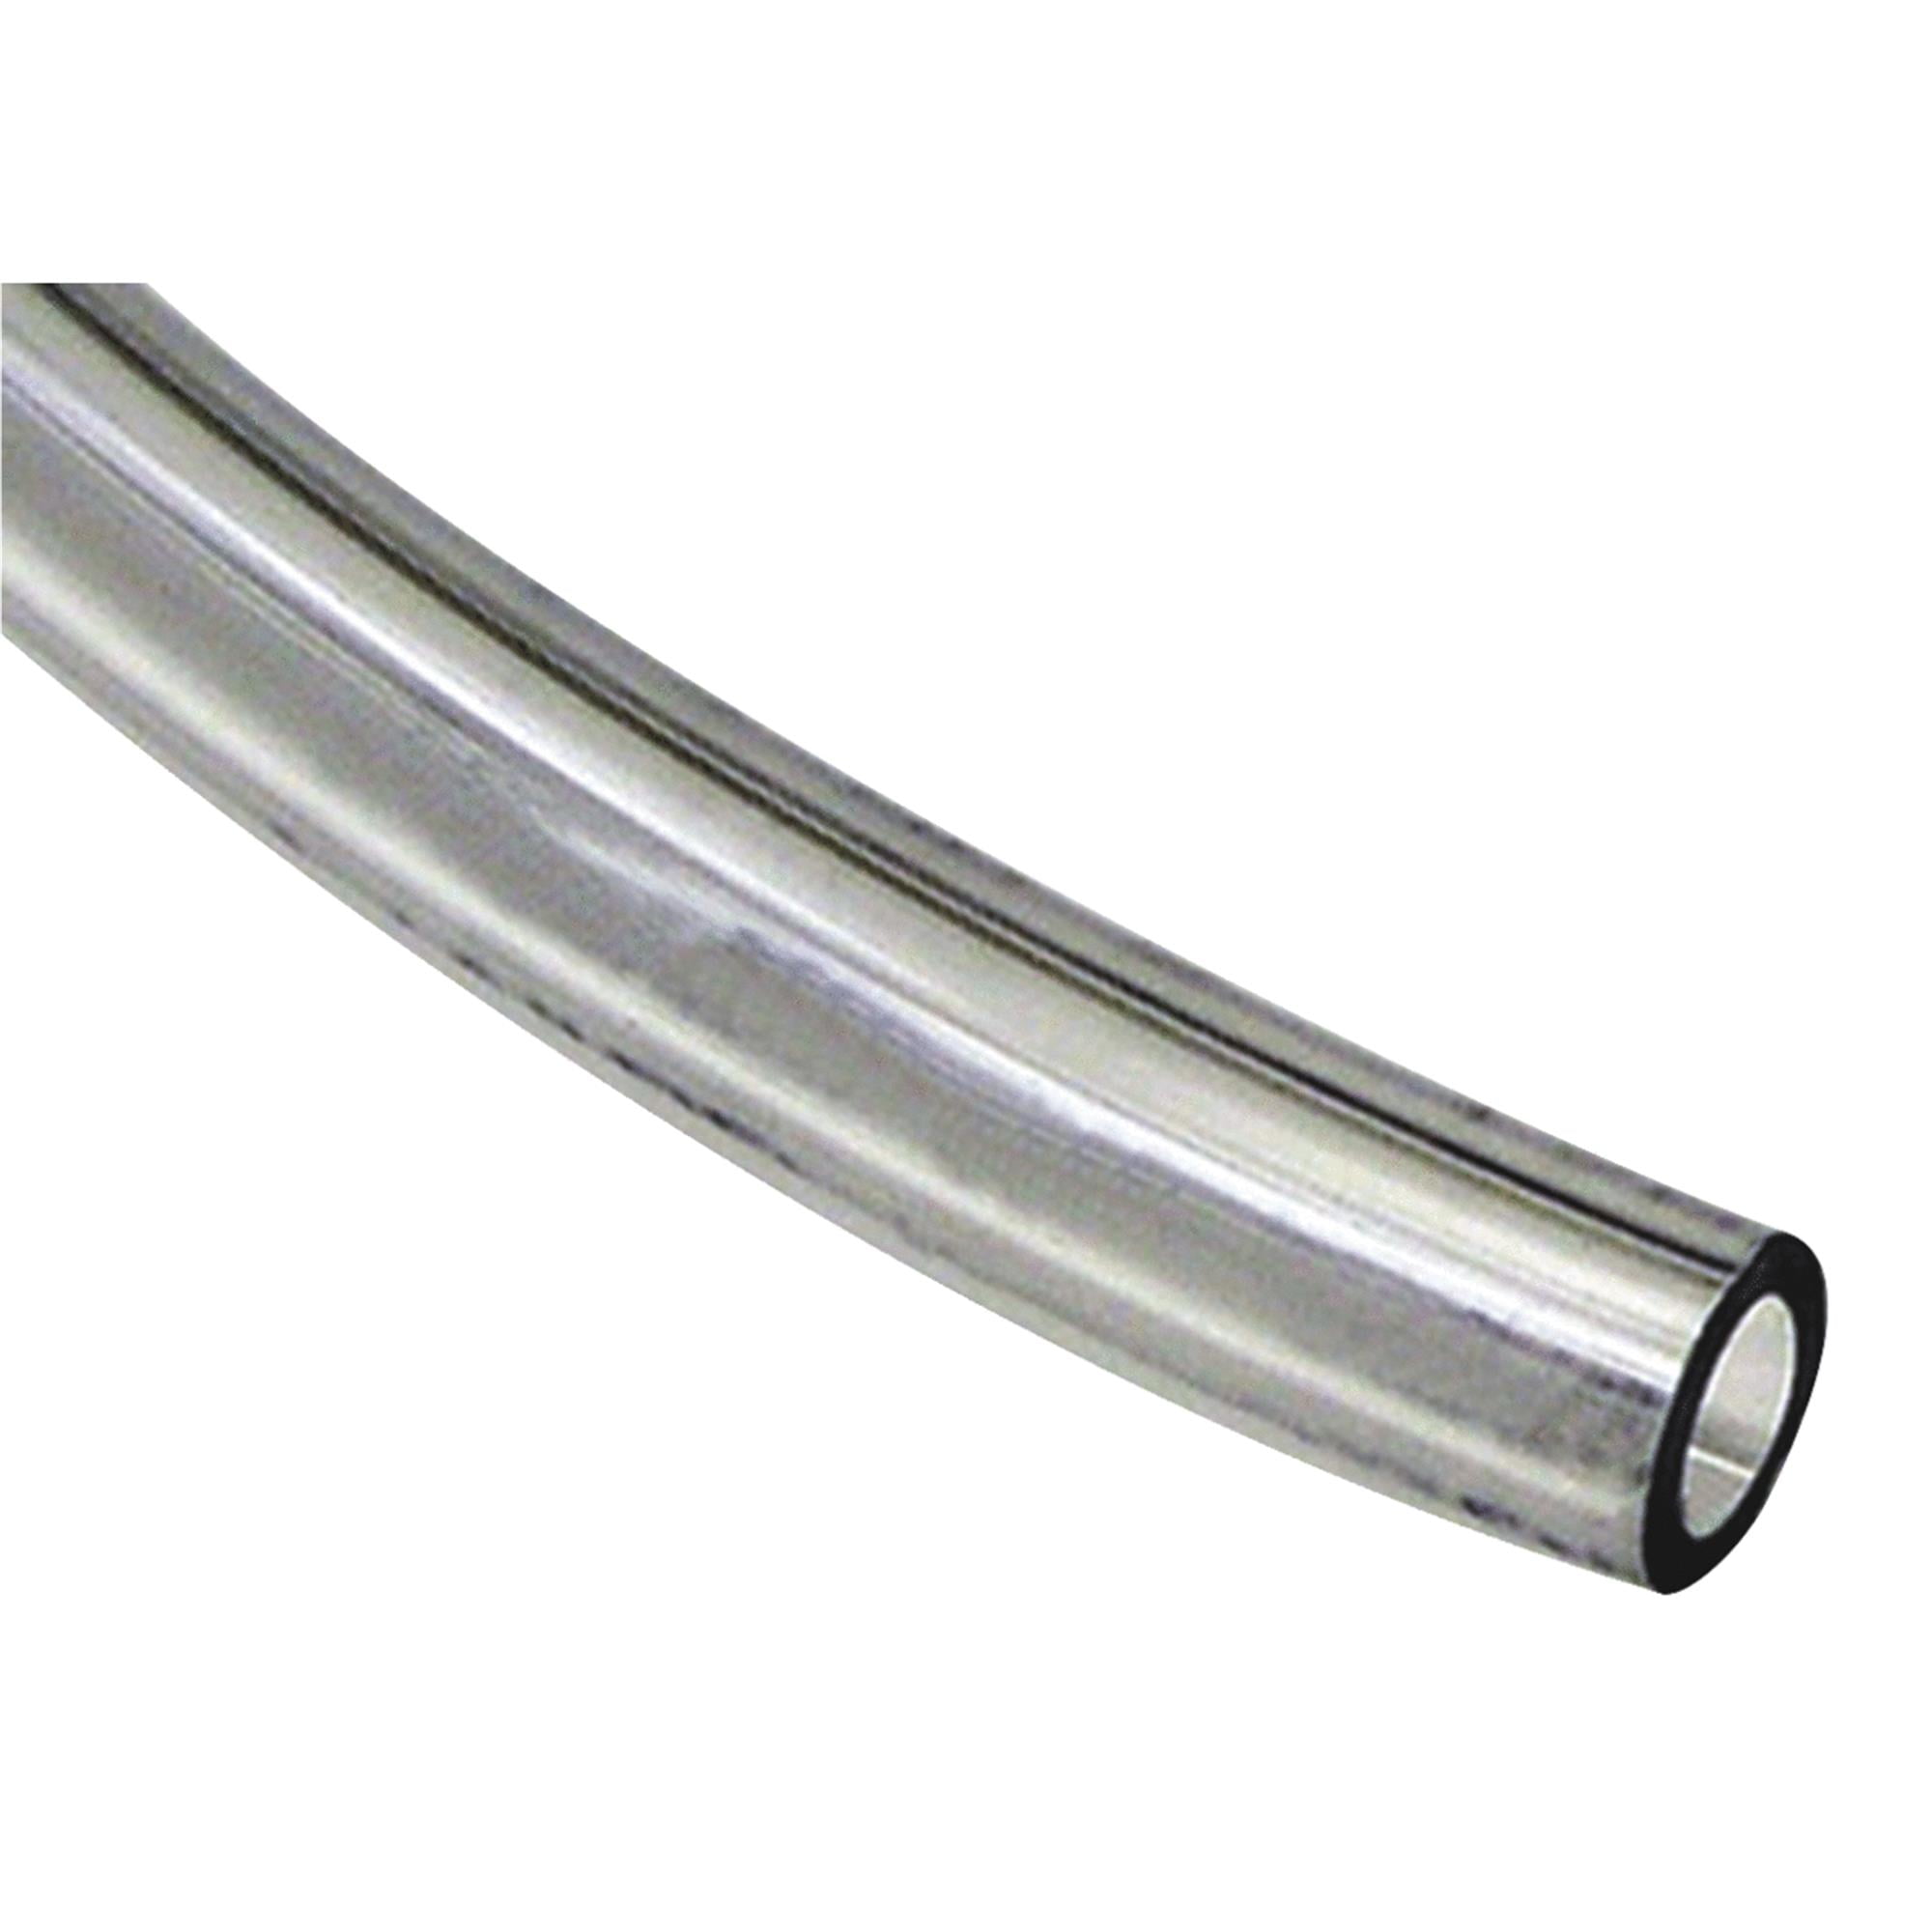 PVC Clear Vinly Tubing,16mm IDx 20mm OD,1Meter/3.28ft,Plastic Flexible Hose Tube 